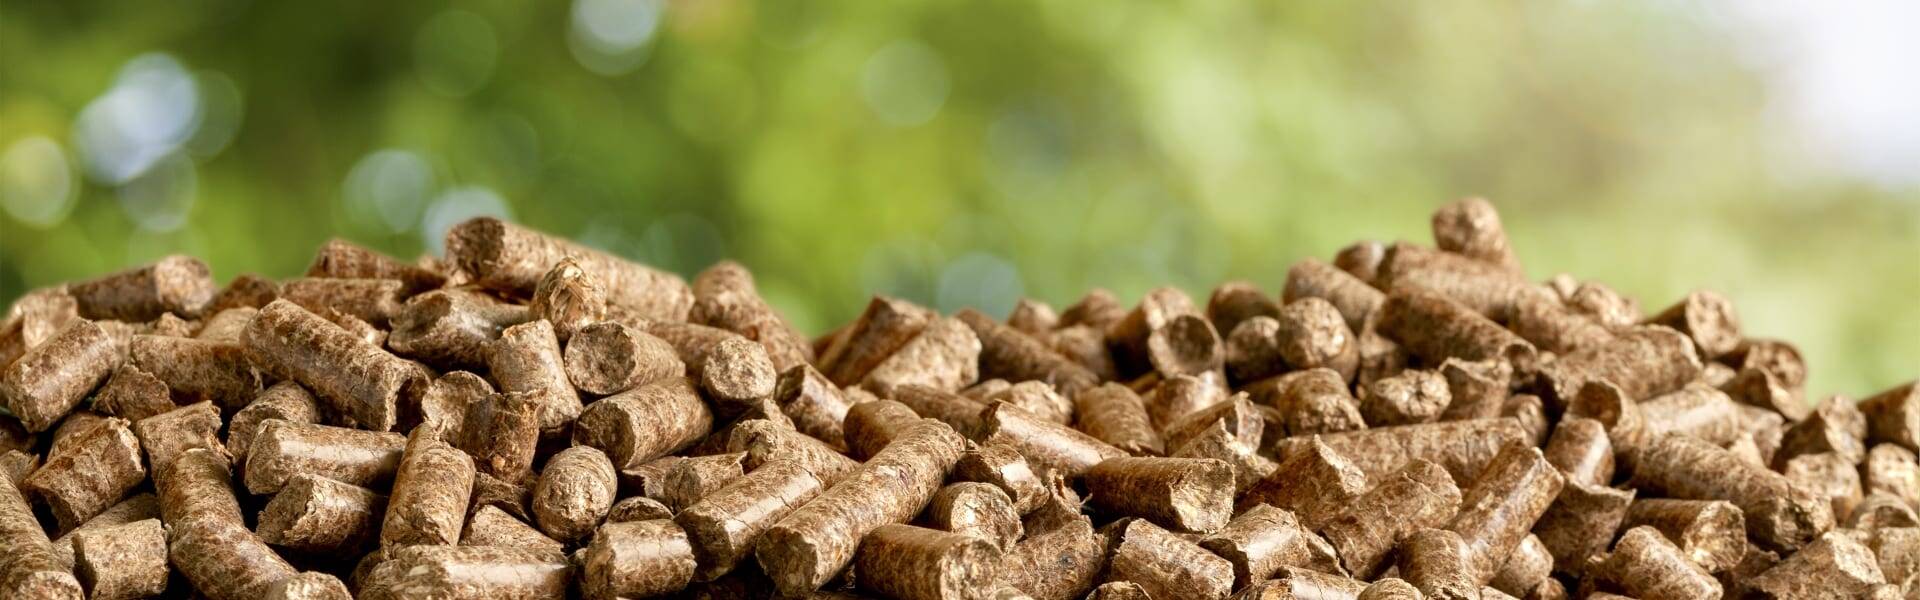 European lawsuit on biomass rules threatens Drax plant